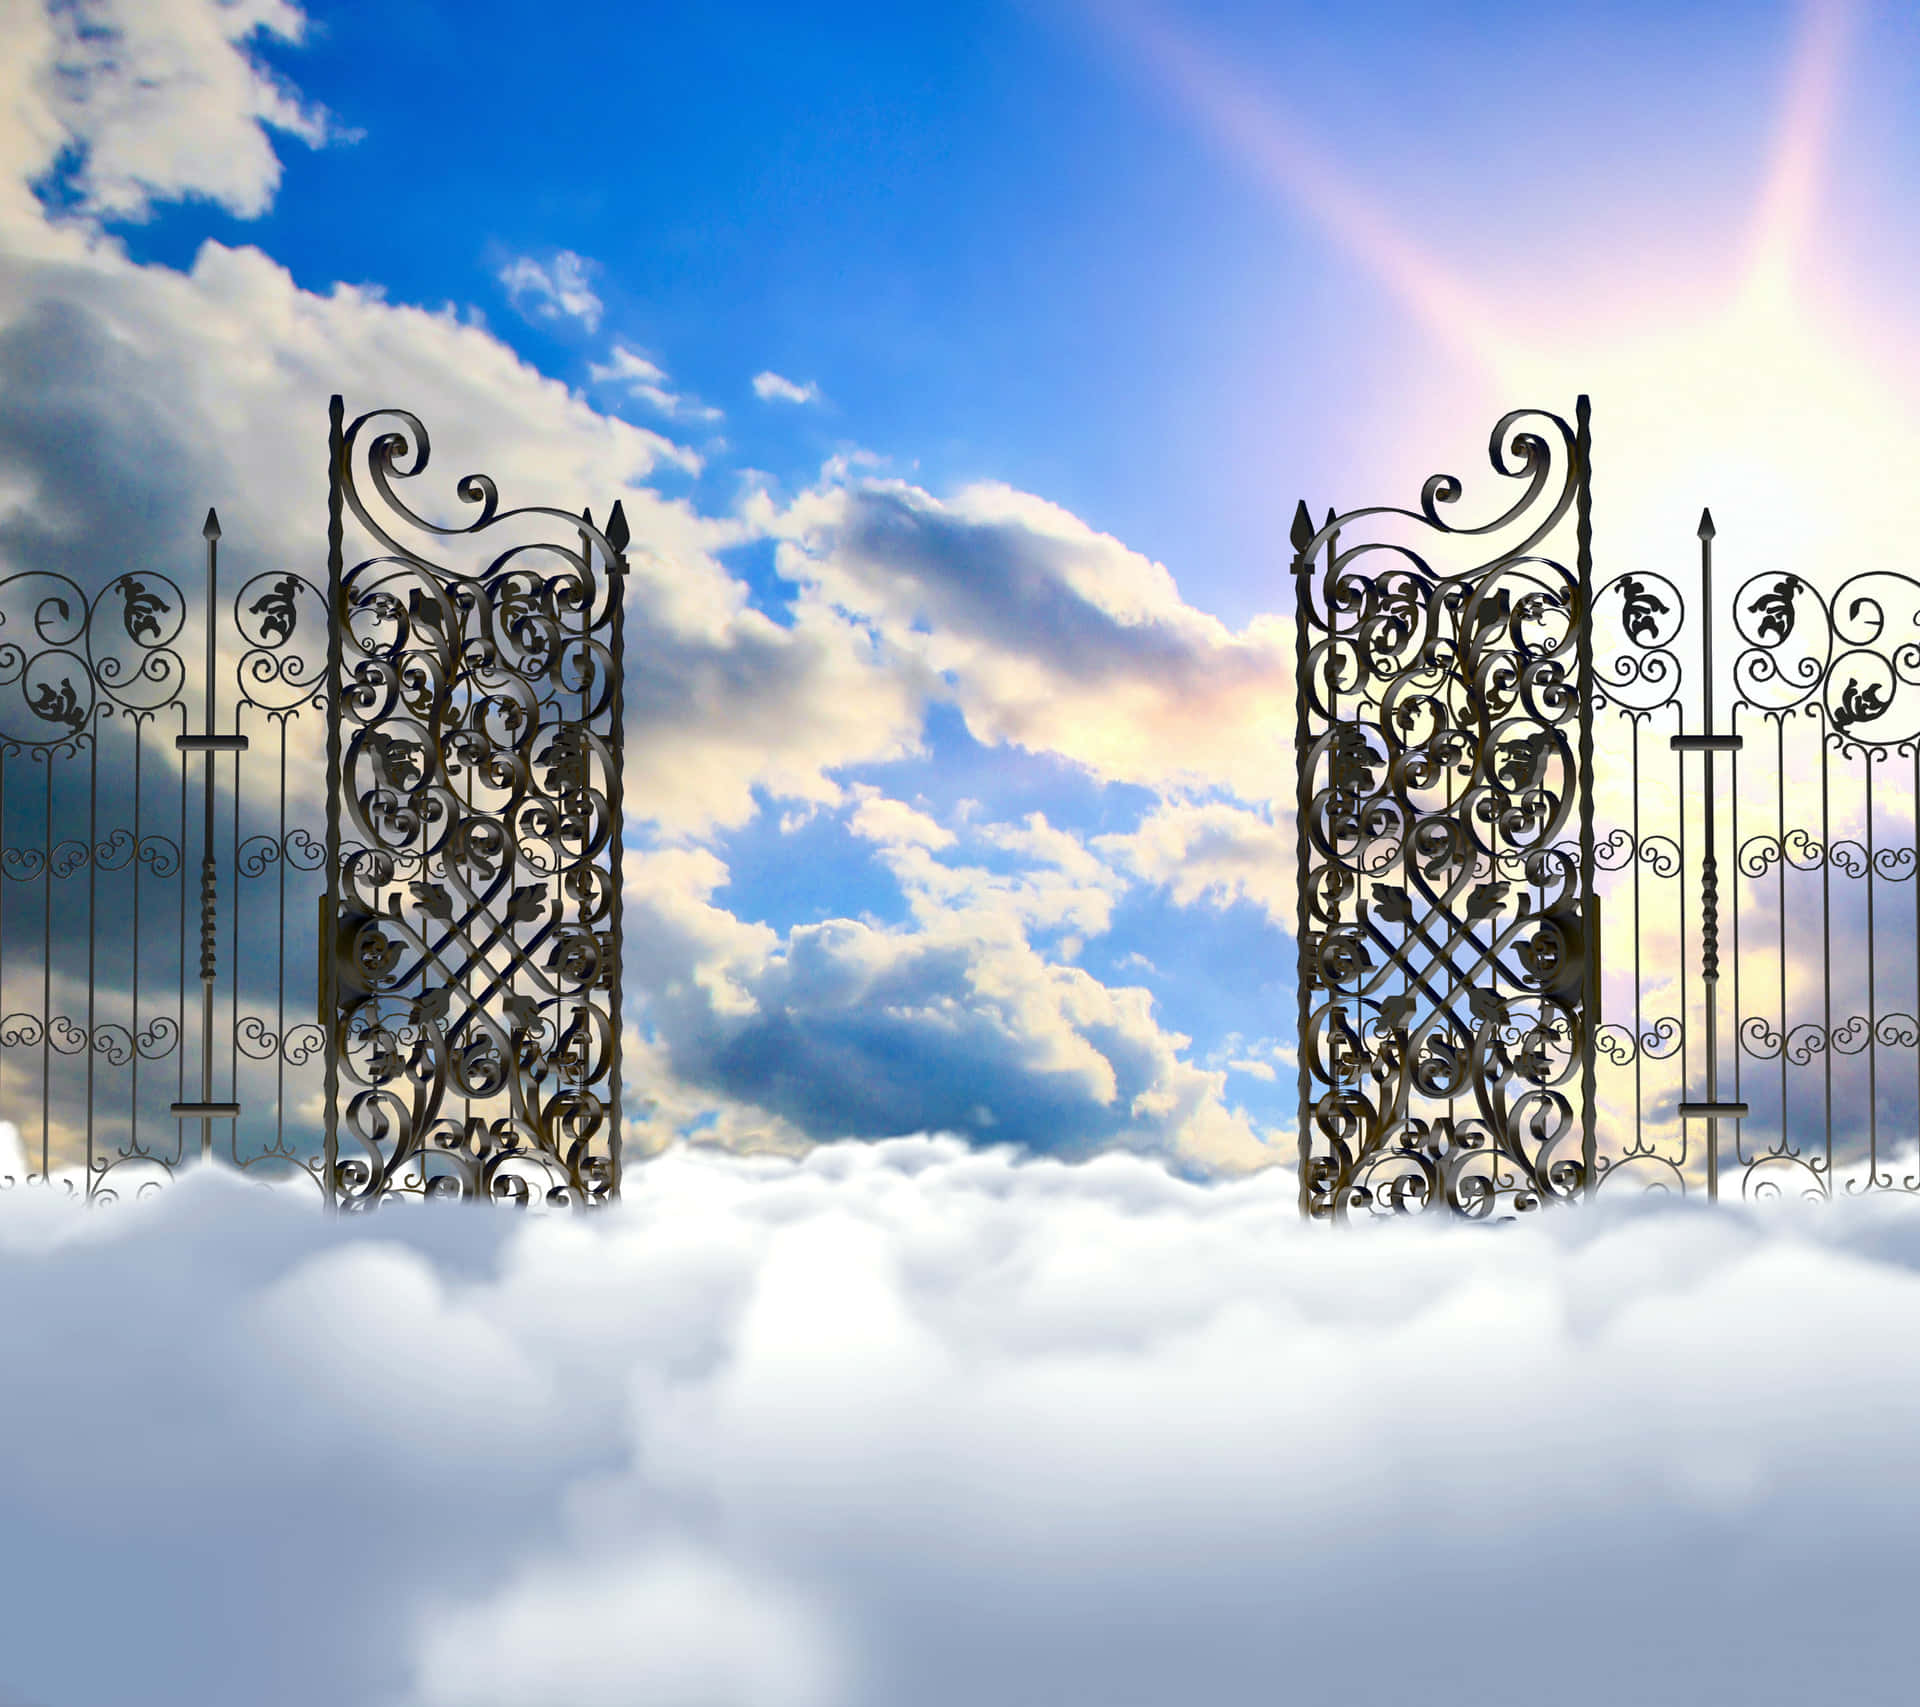 100+] Heaven Gates Backgrounds